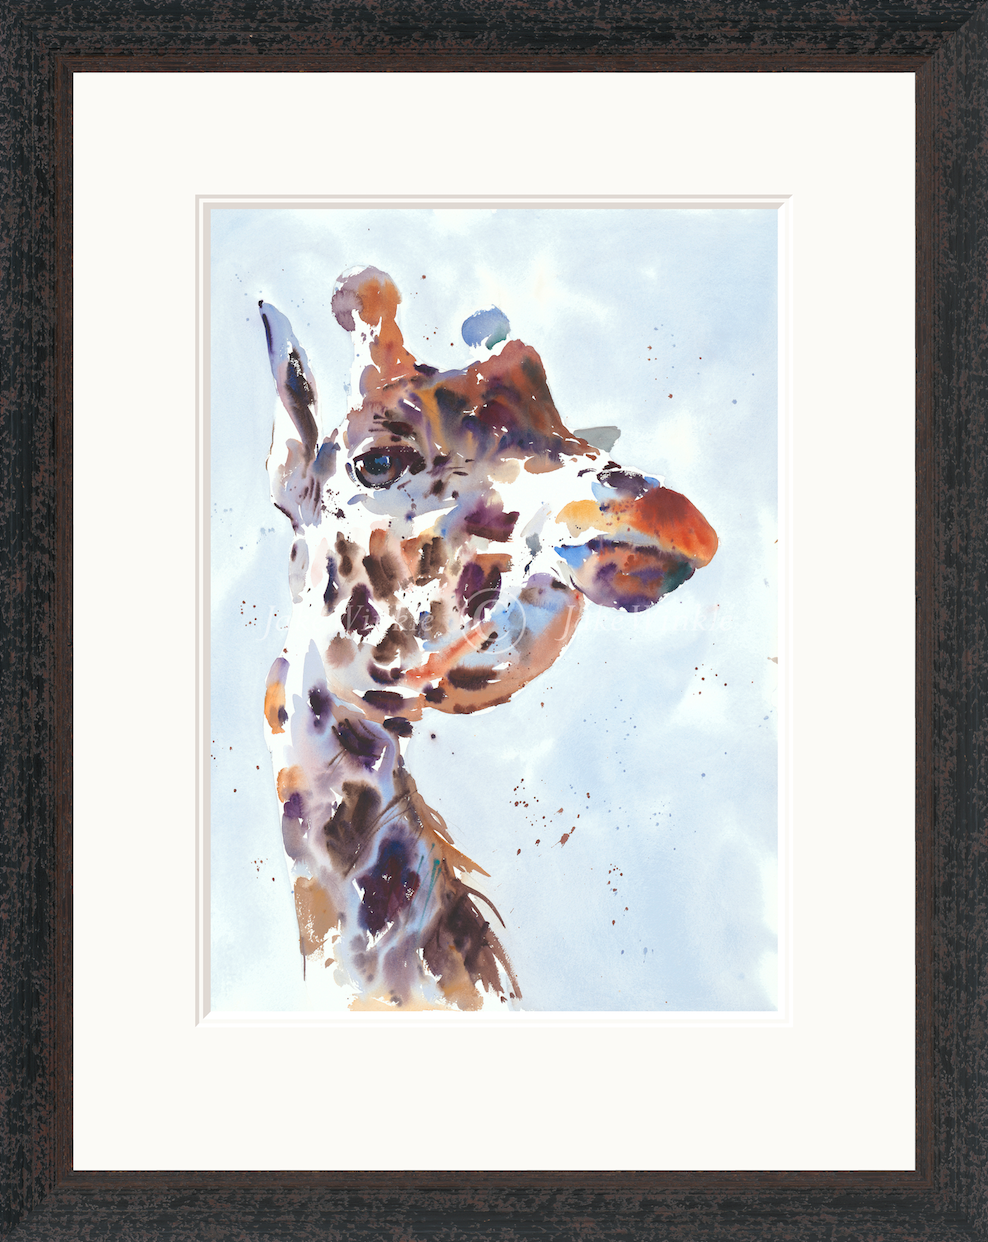 Jake Winkle Majestic Giraffe limited edition framed artwork